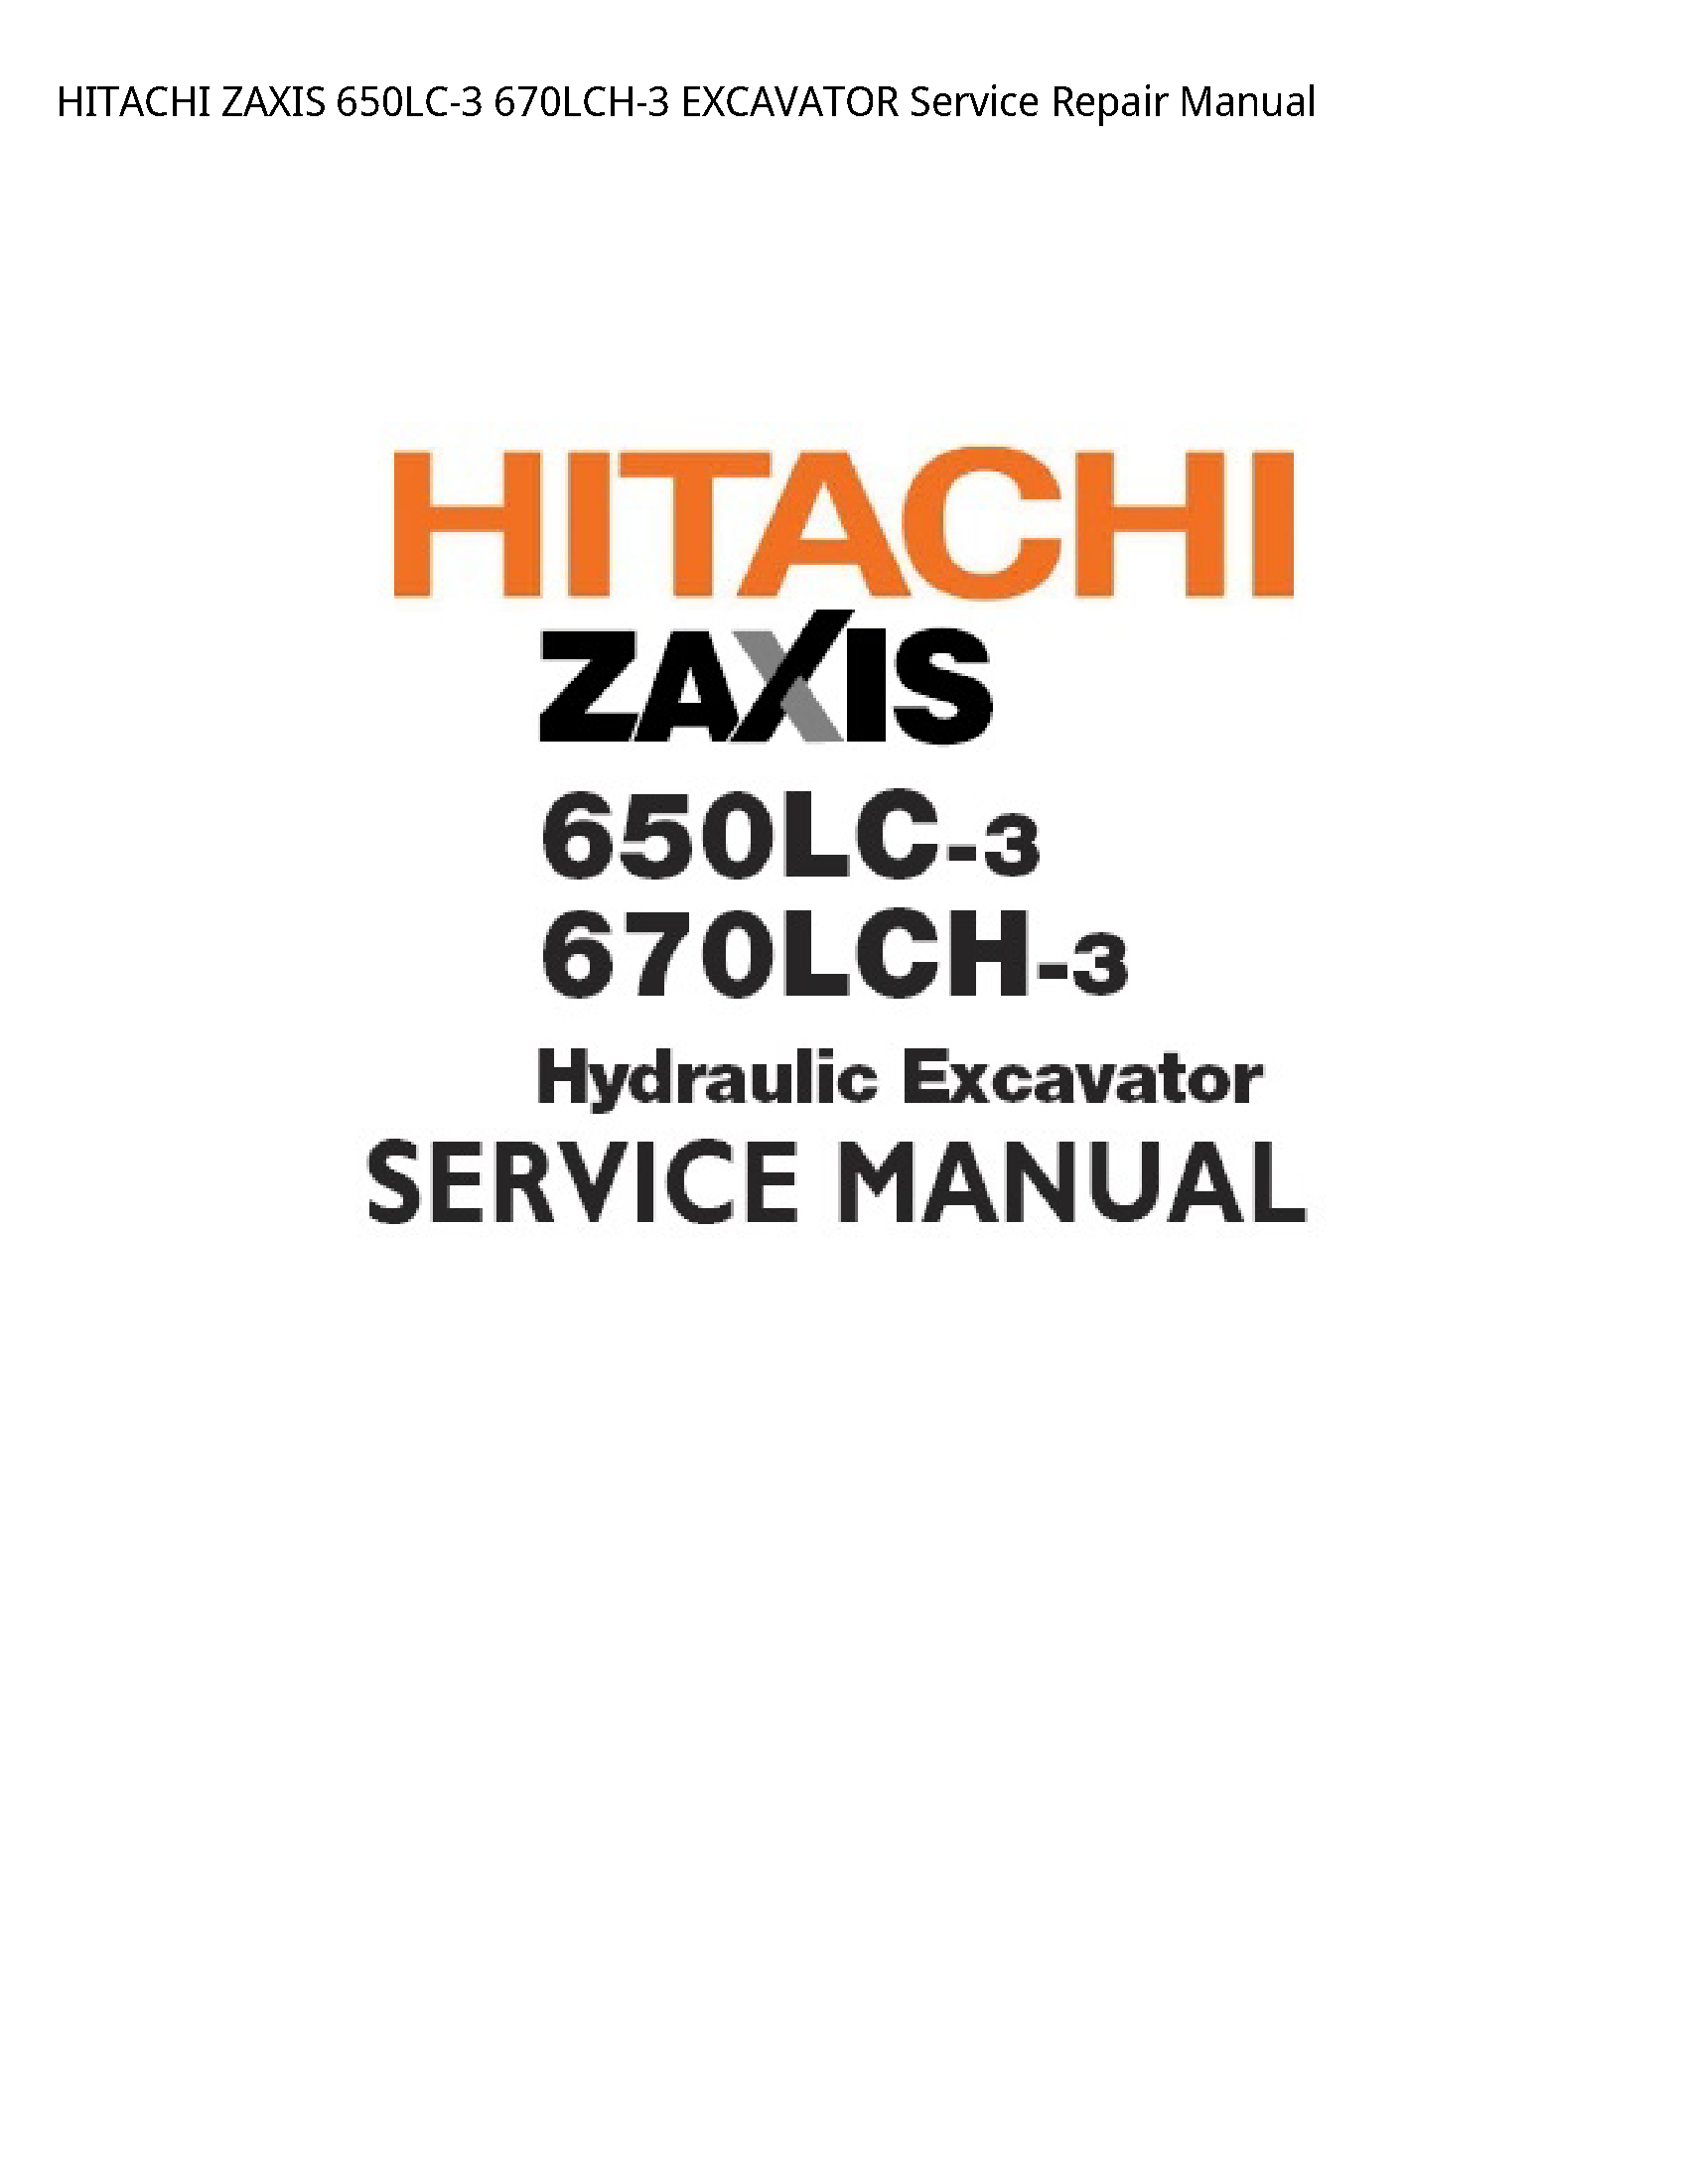 Hitachi 650LC-3 ZAXIS EXCAVATOR manual